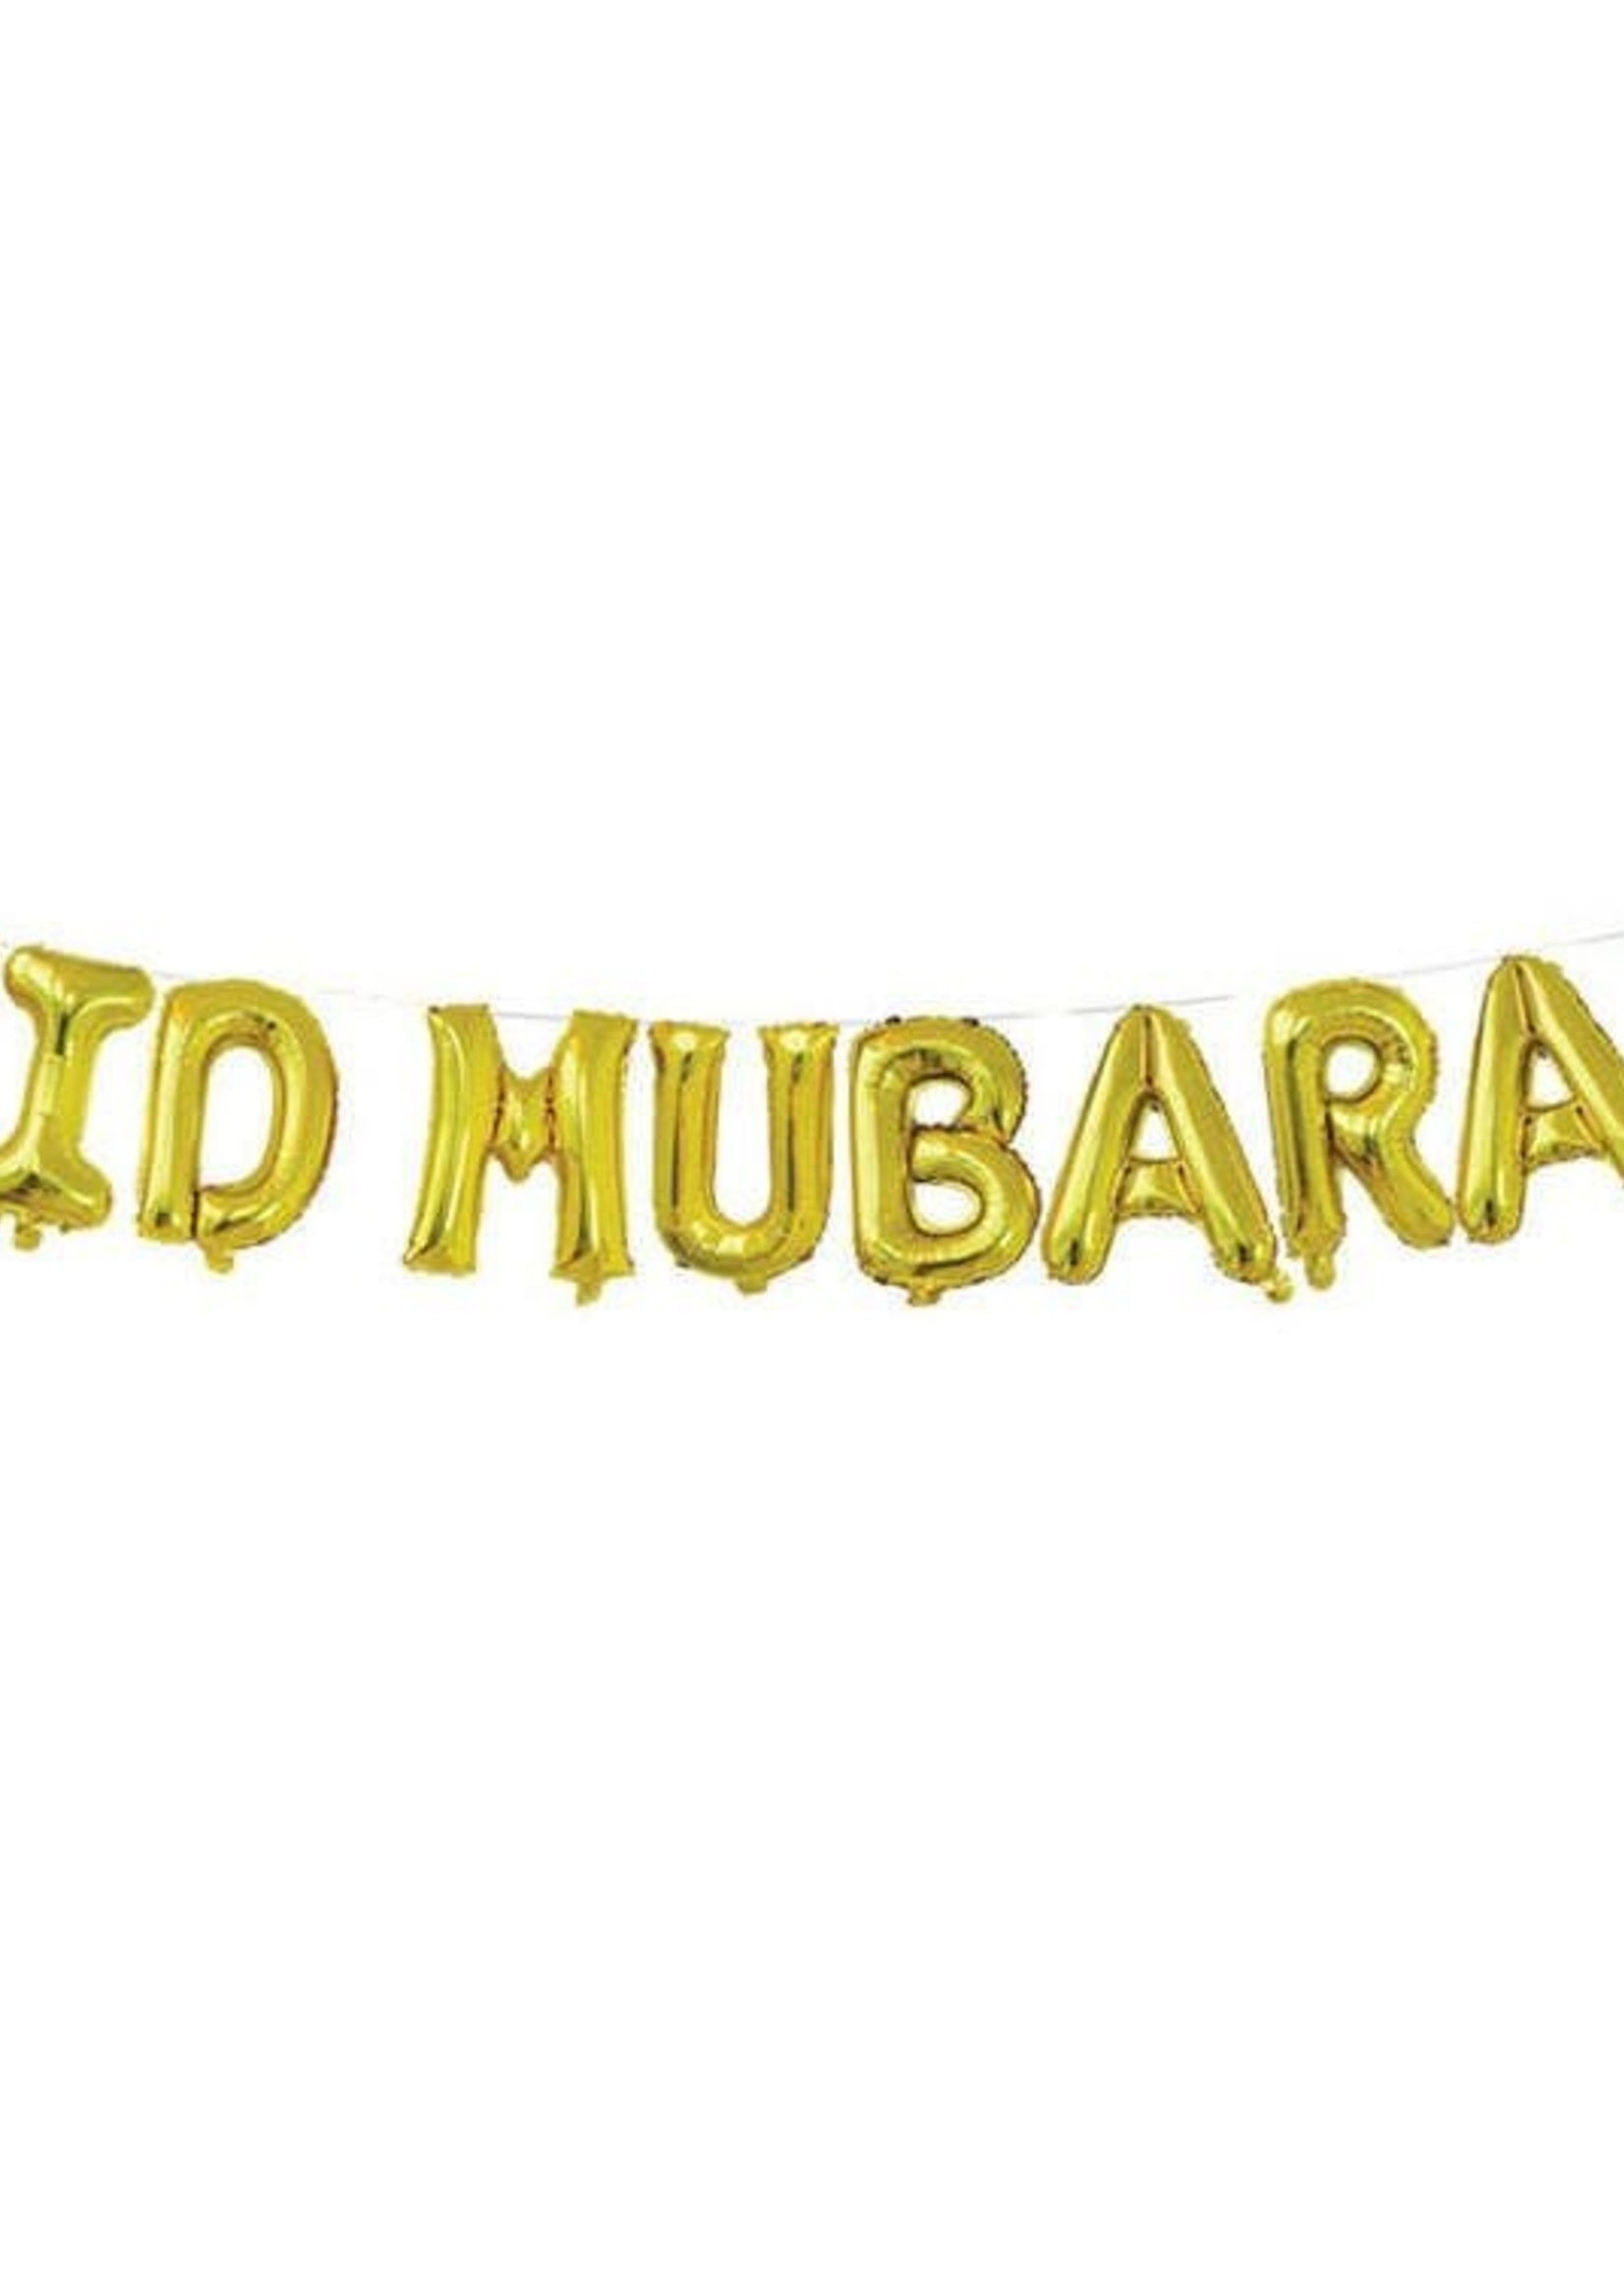 Eid Mubarak Foil banner Gold